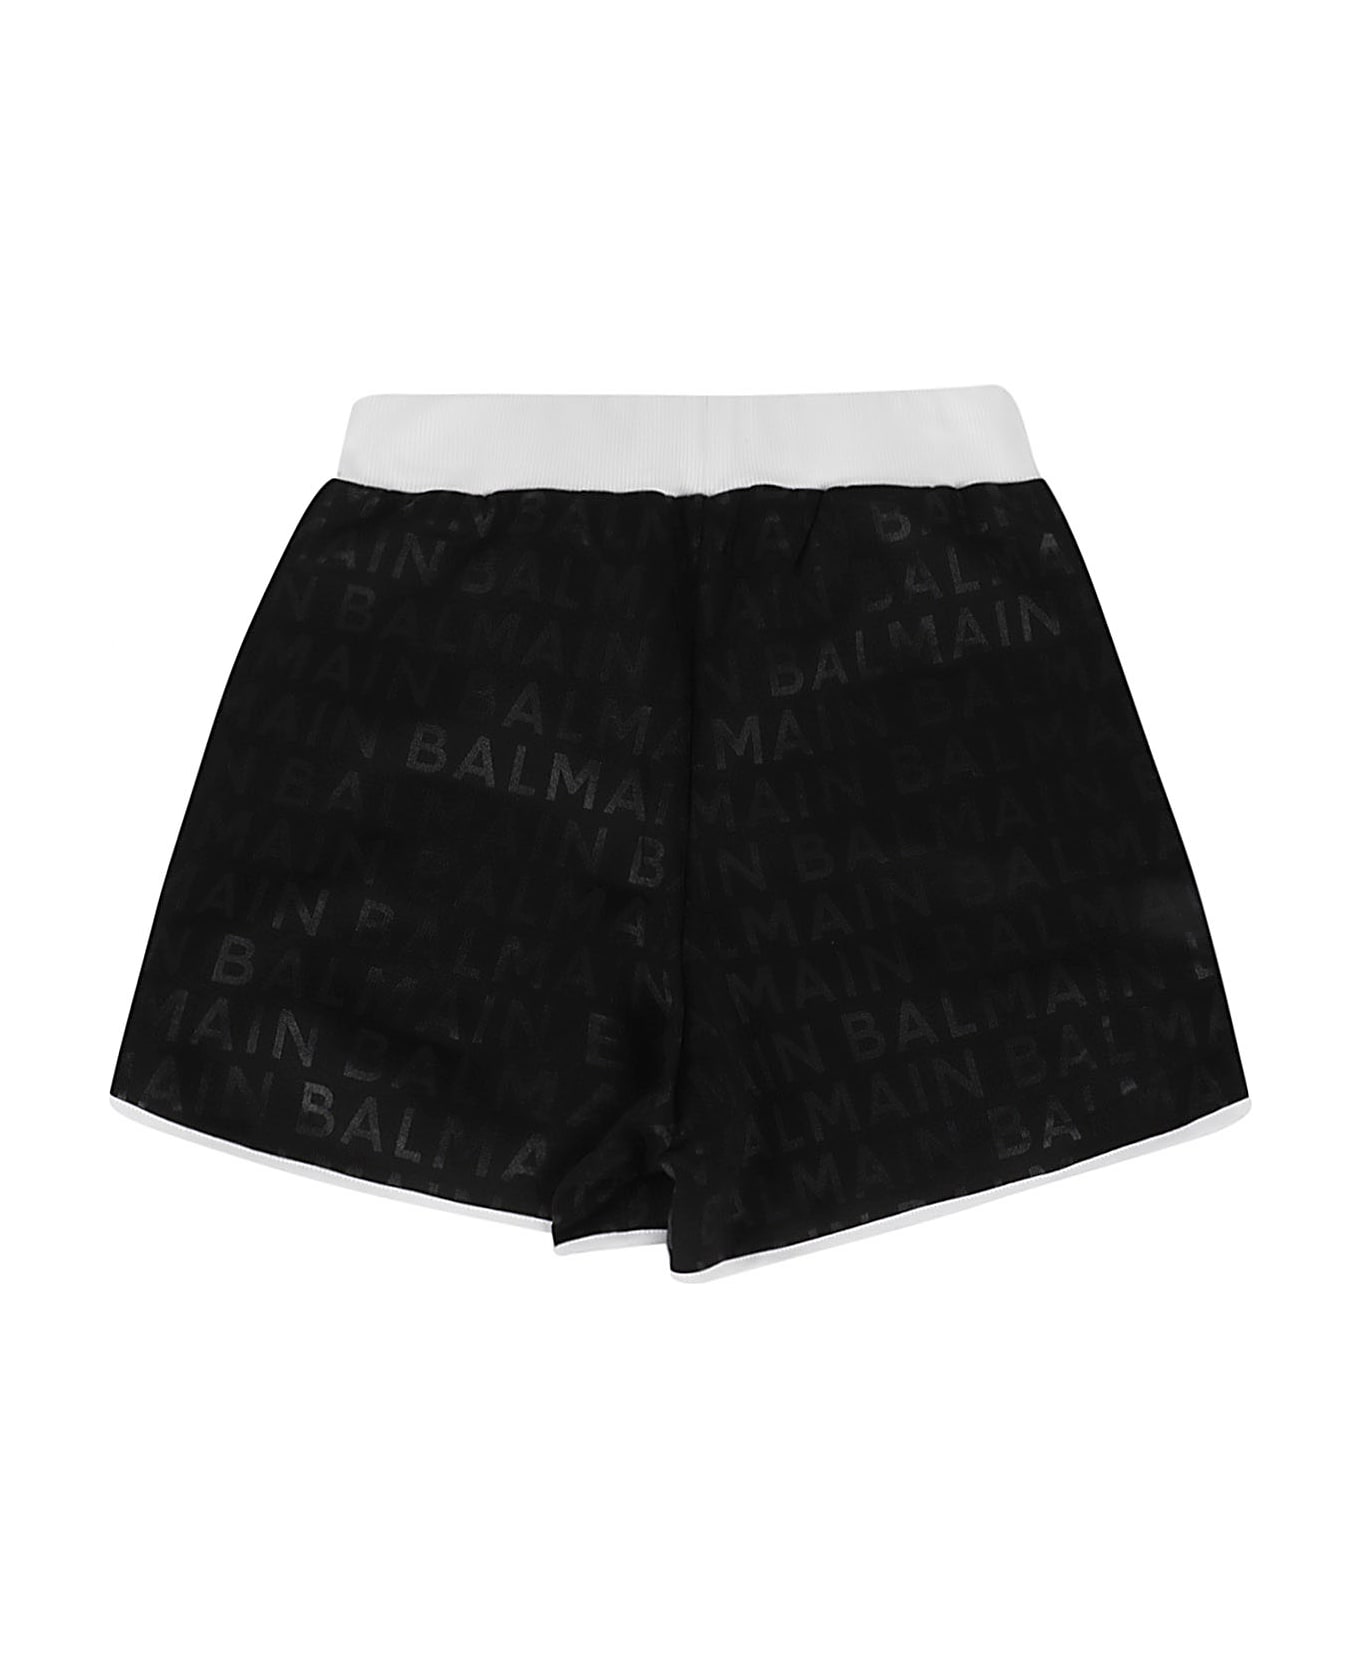 Balmain Jersey Shorts - Bc Black White